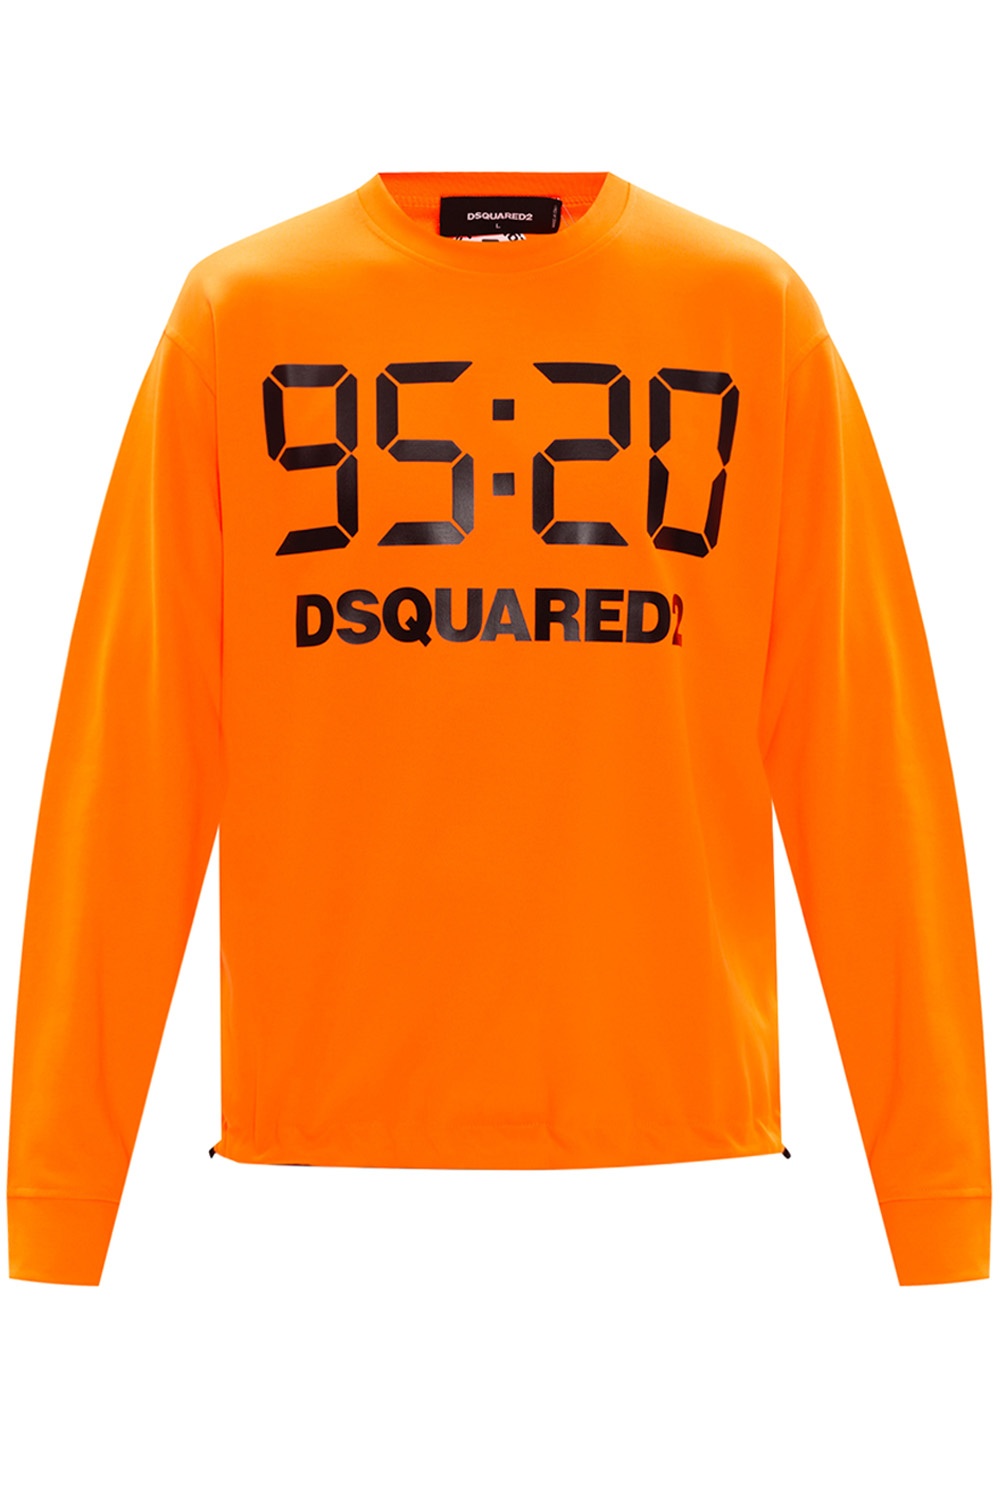 dsquared2 orange sweatshirt